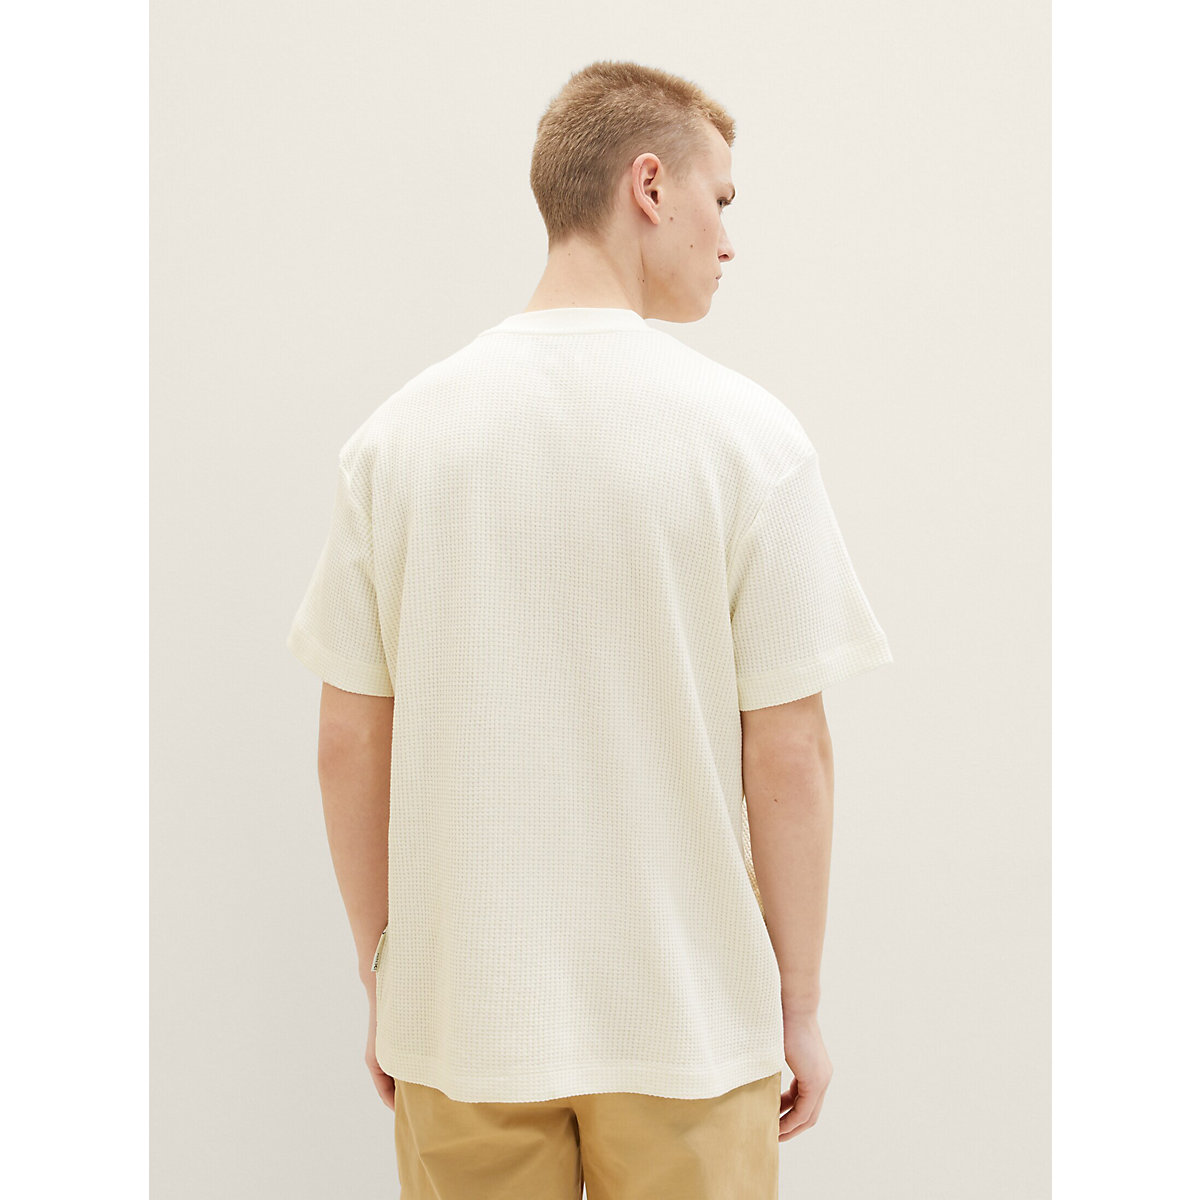 TOM TAILOR Denim T-Shirt T-Shirt mit Waffelstruktur T-Shirts offwhite CU9854